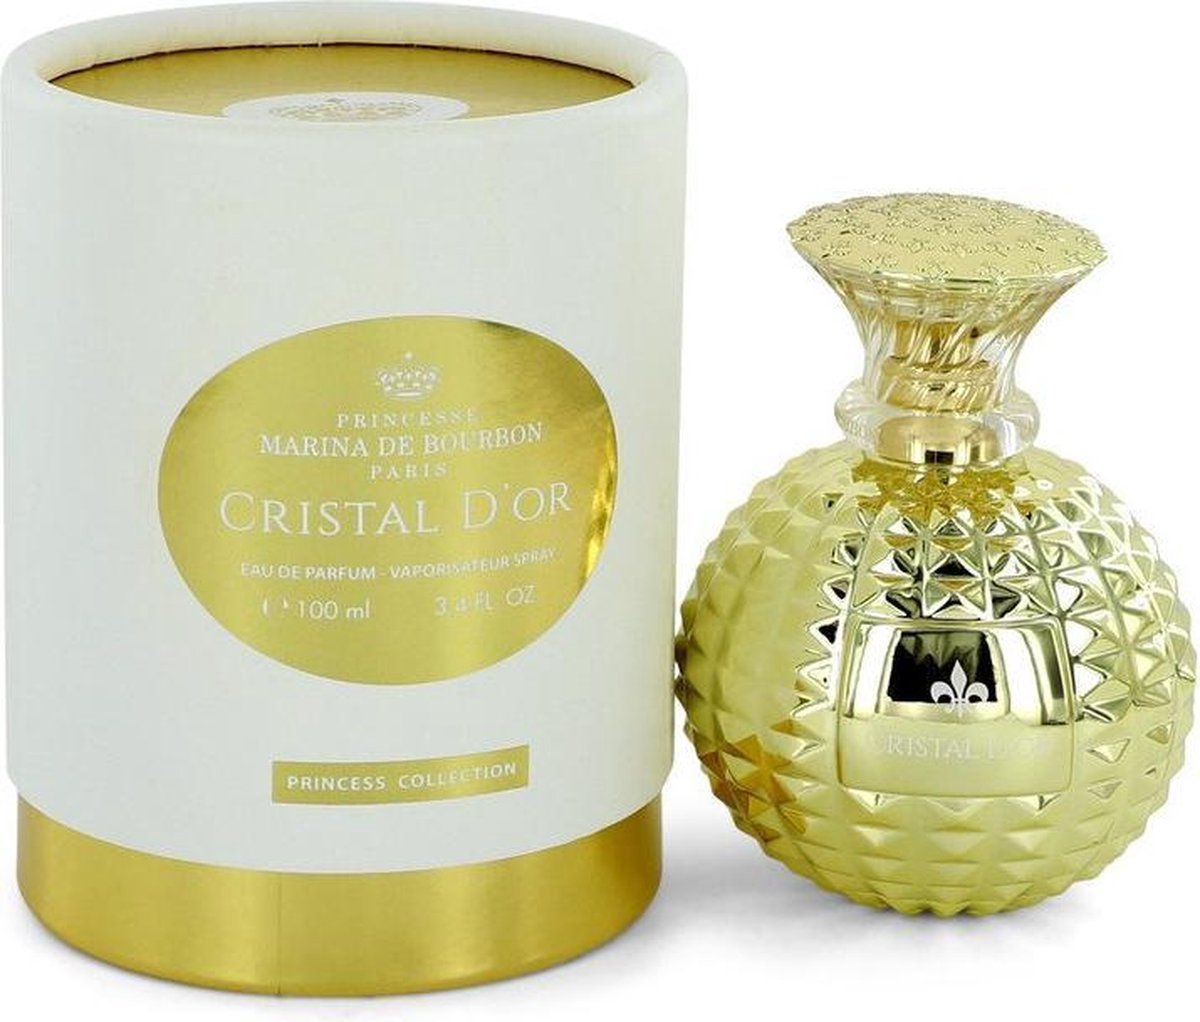 Marina De Bourbon Cristal D'or - Eau de parfum spray - 100 ml